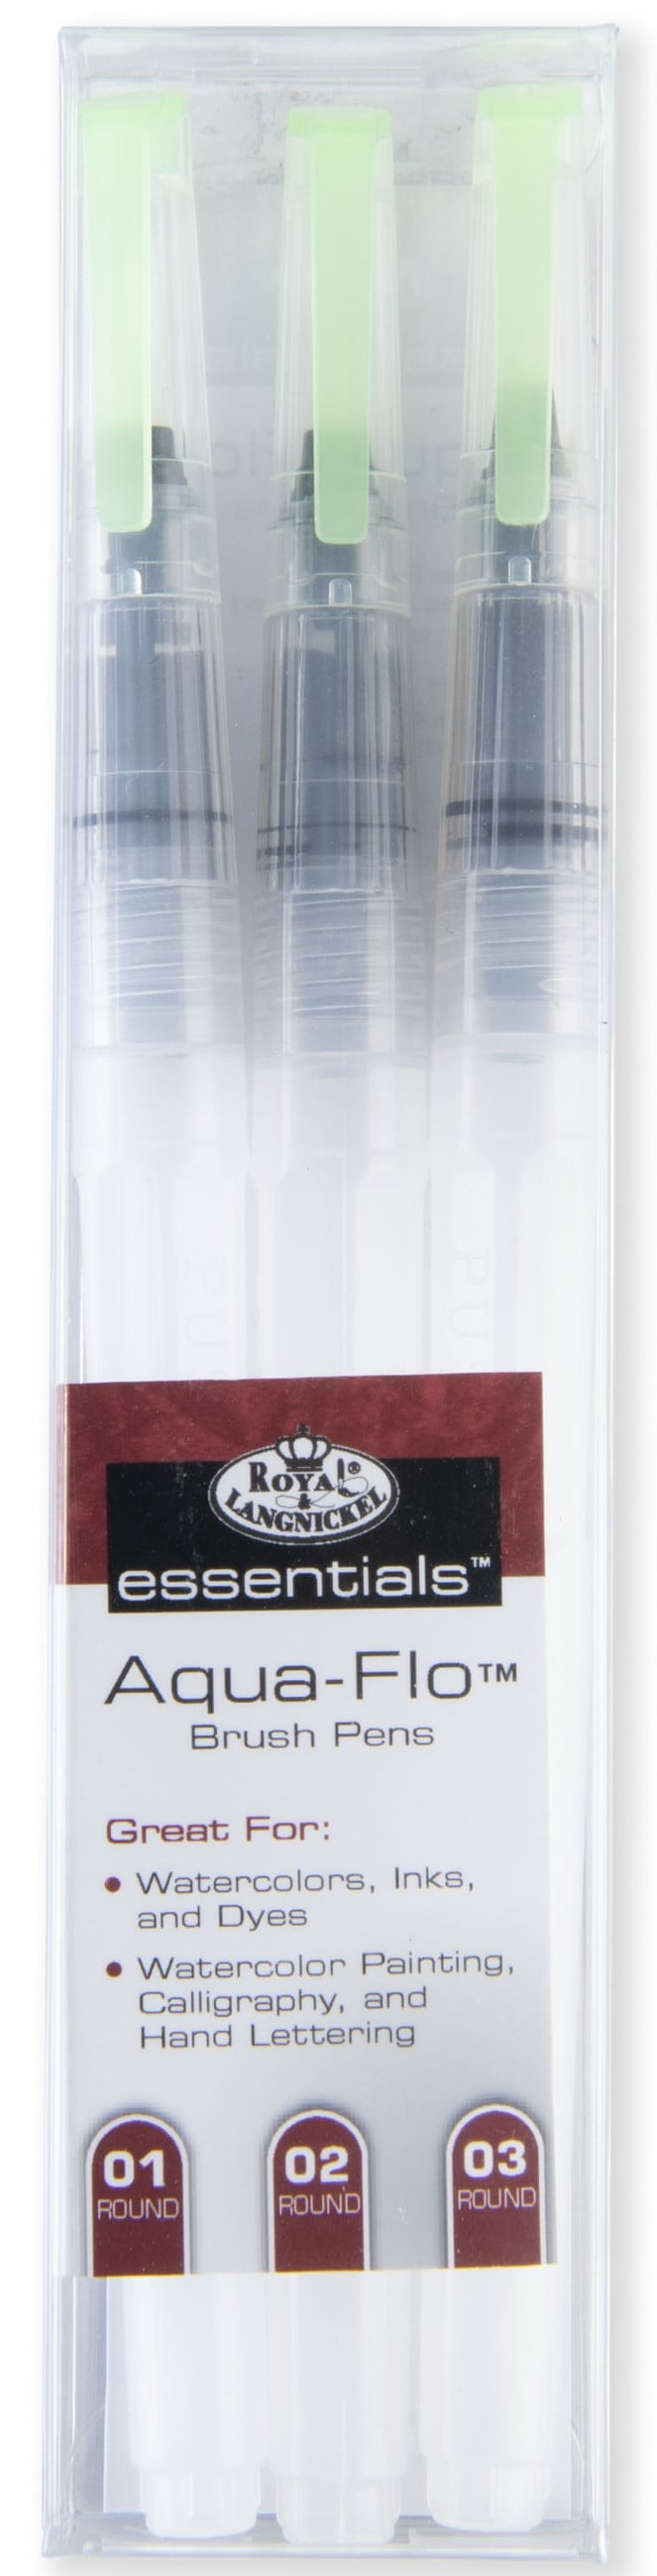 Royal & Langnickel - Essentials Aqua-Flo Clear Plastic Refillable Round ...